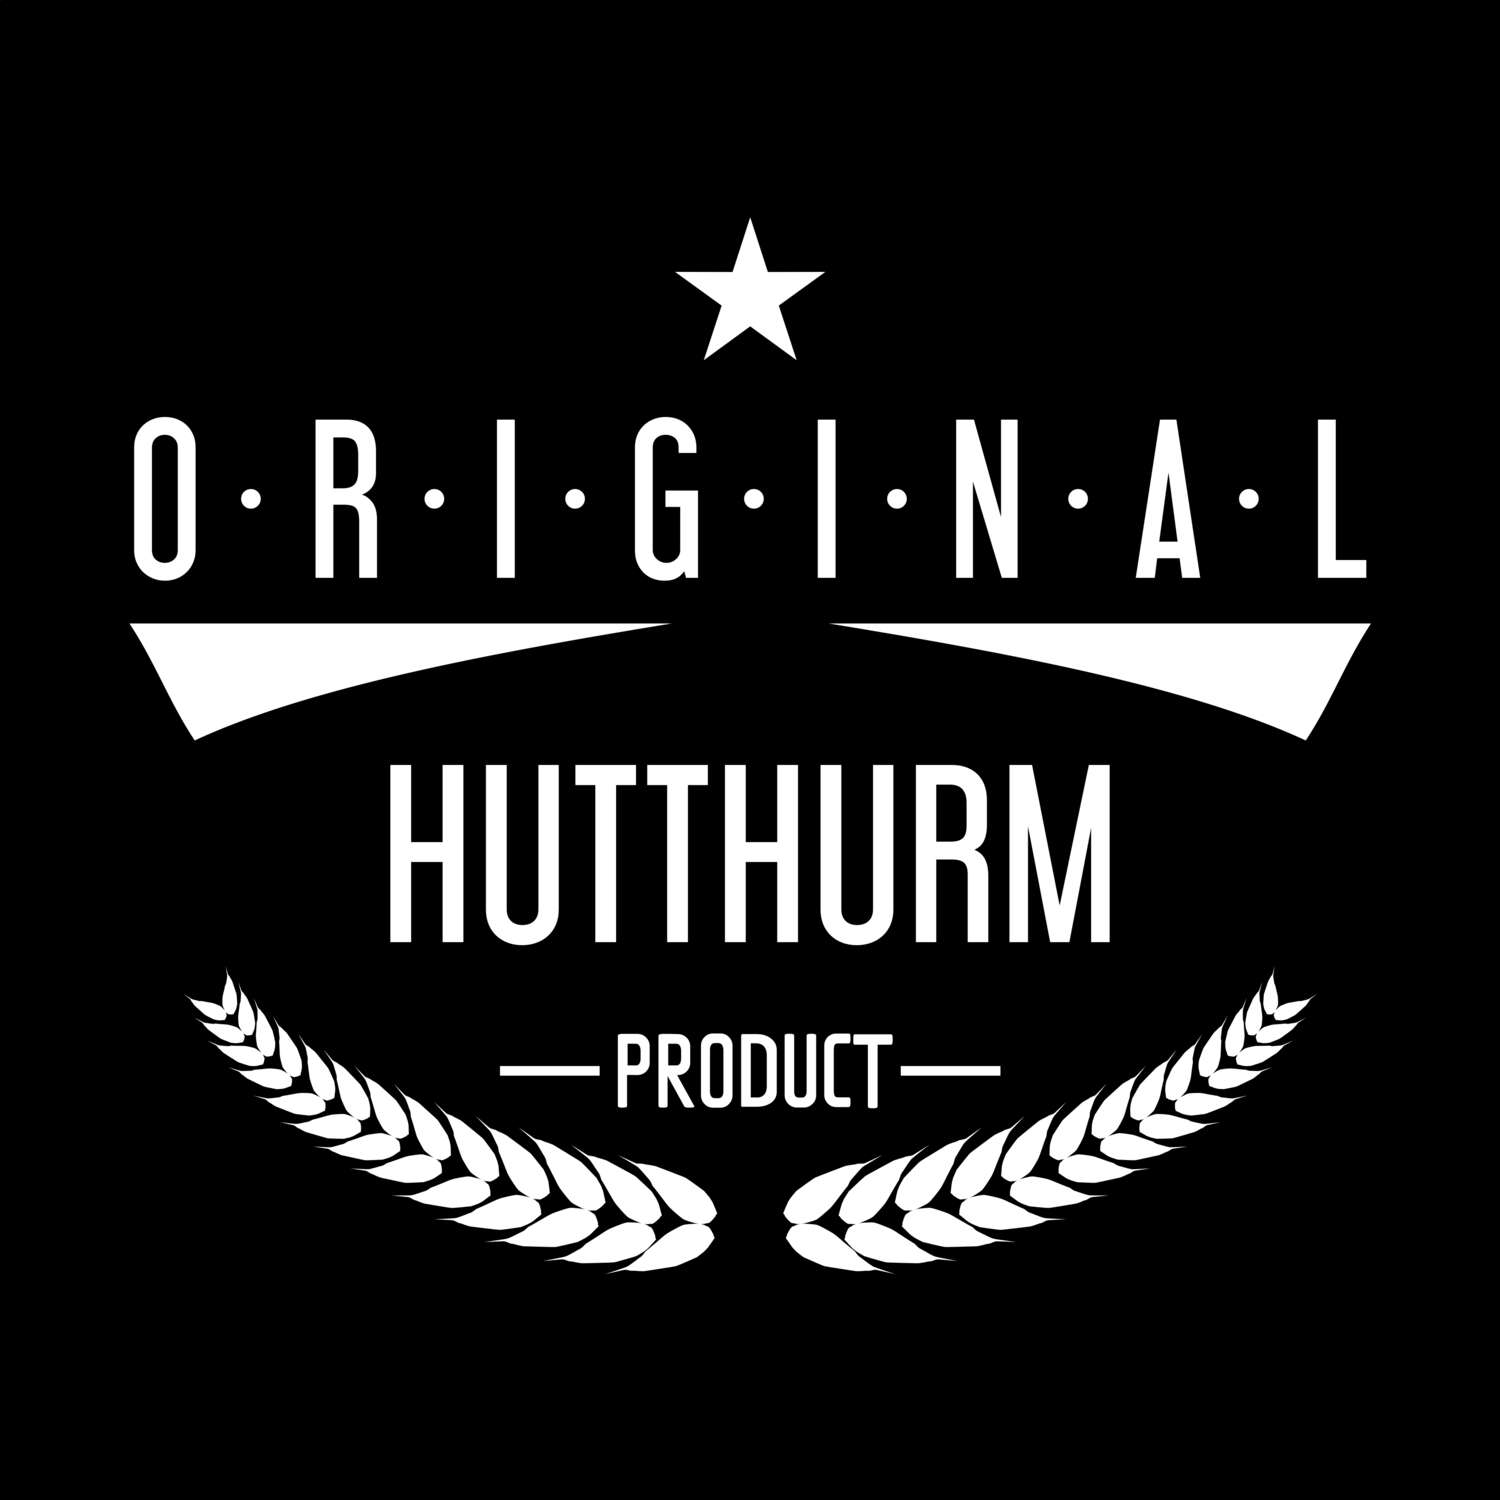 Hutthurm T-Shirt »Original Product«